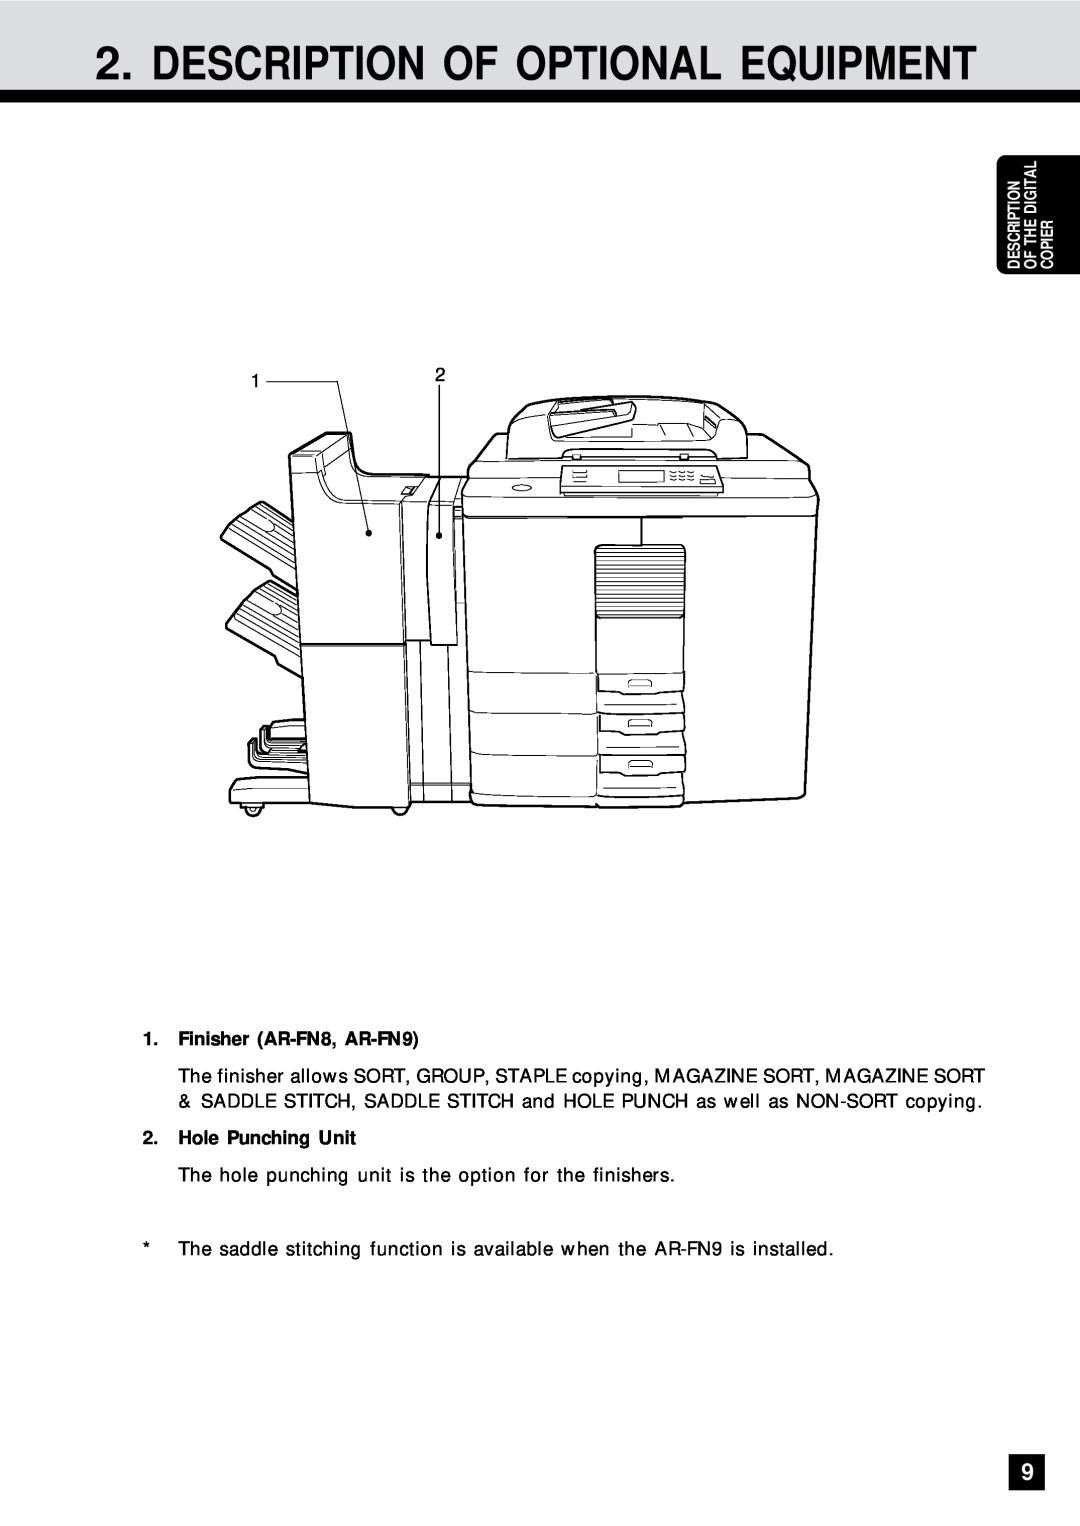 Sharp AR-650 operation manual Description Of Optional Equipment, Finisher AR-FN8, AR-FN9, Hole Punching Unit 